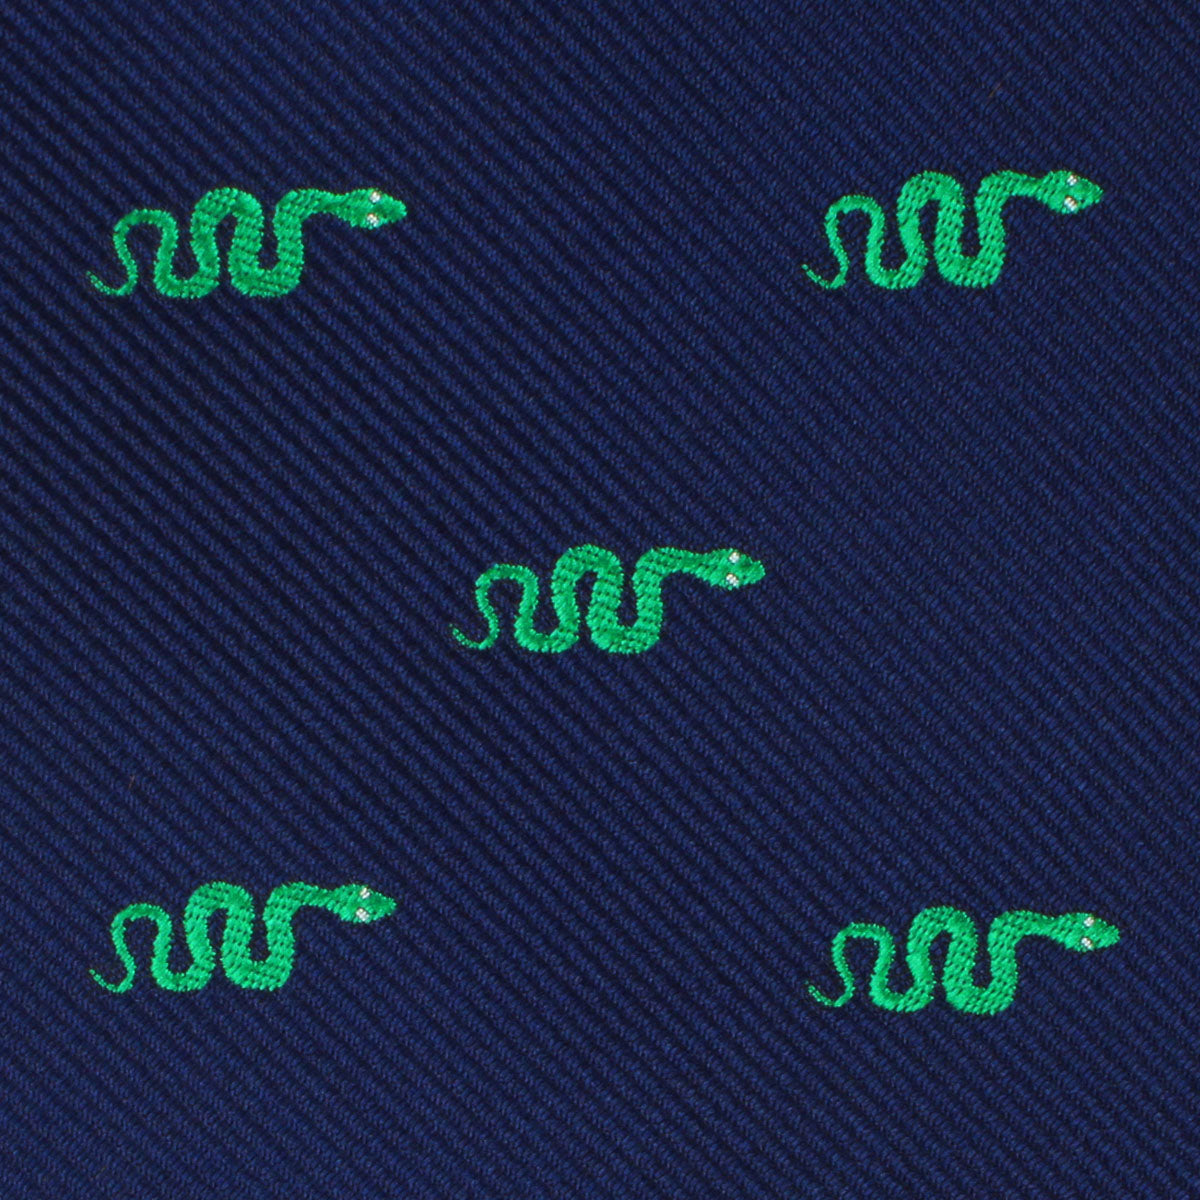 Serpico The Snake Bow Tie Fabric